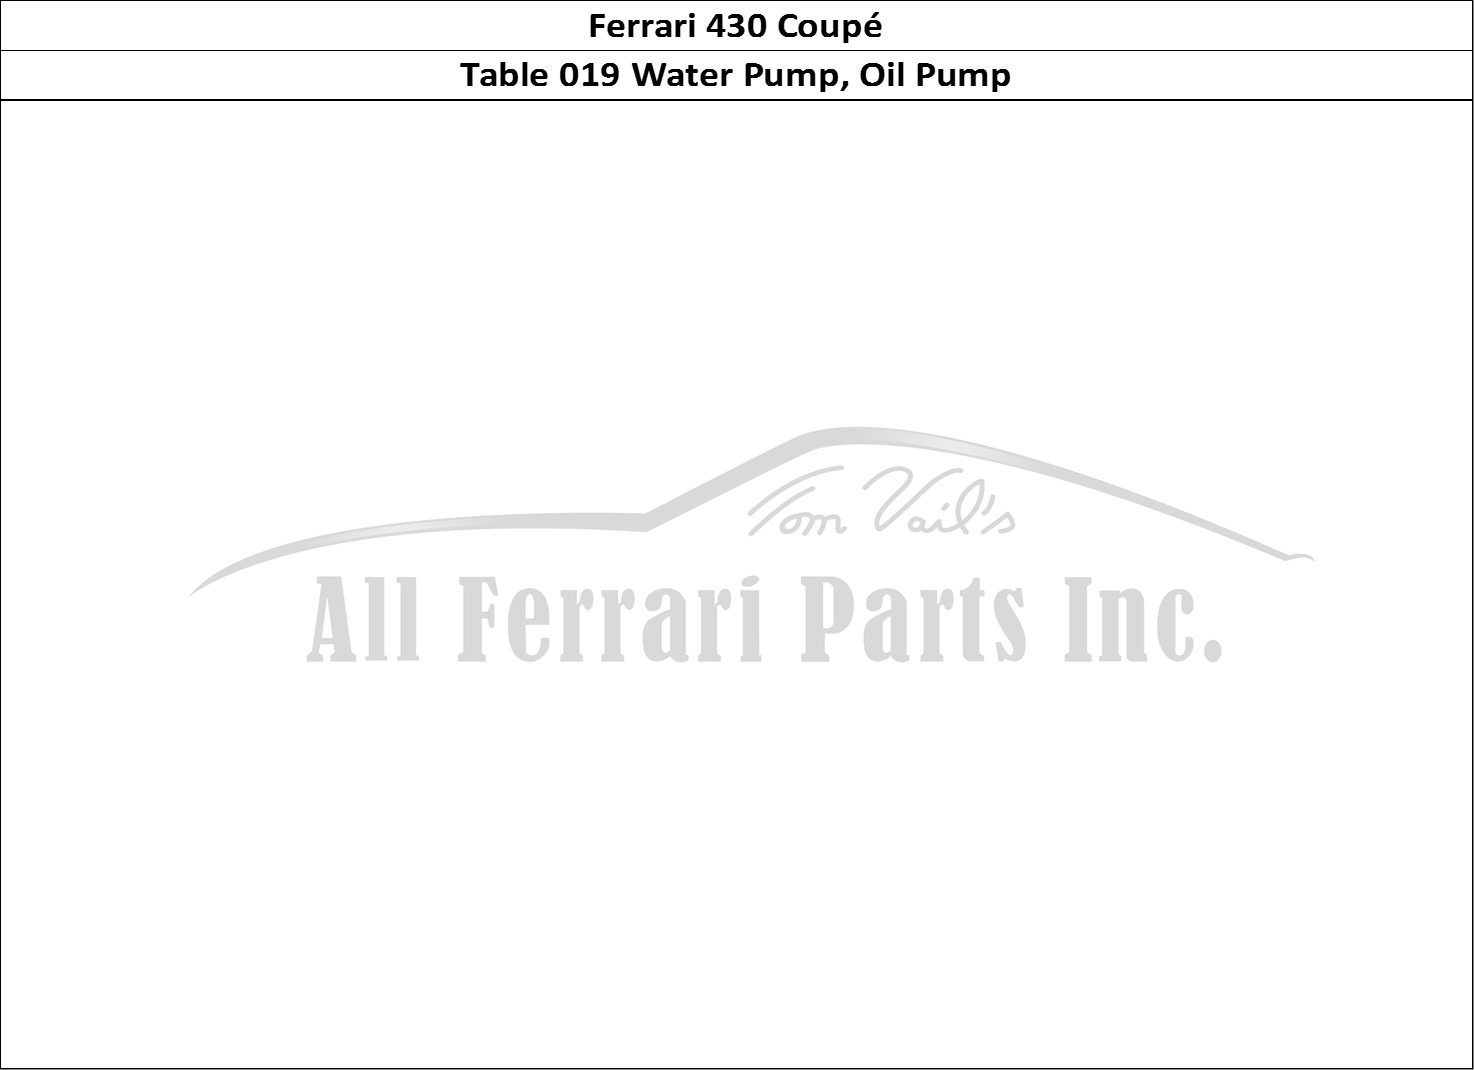 Ferrari Parts Ferrari 430 Coup Page 019 Water/Oil Pump